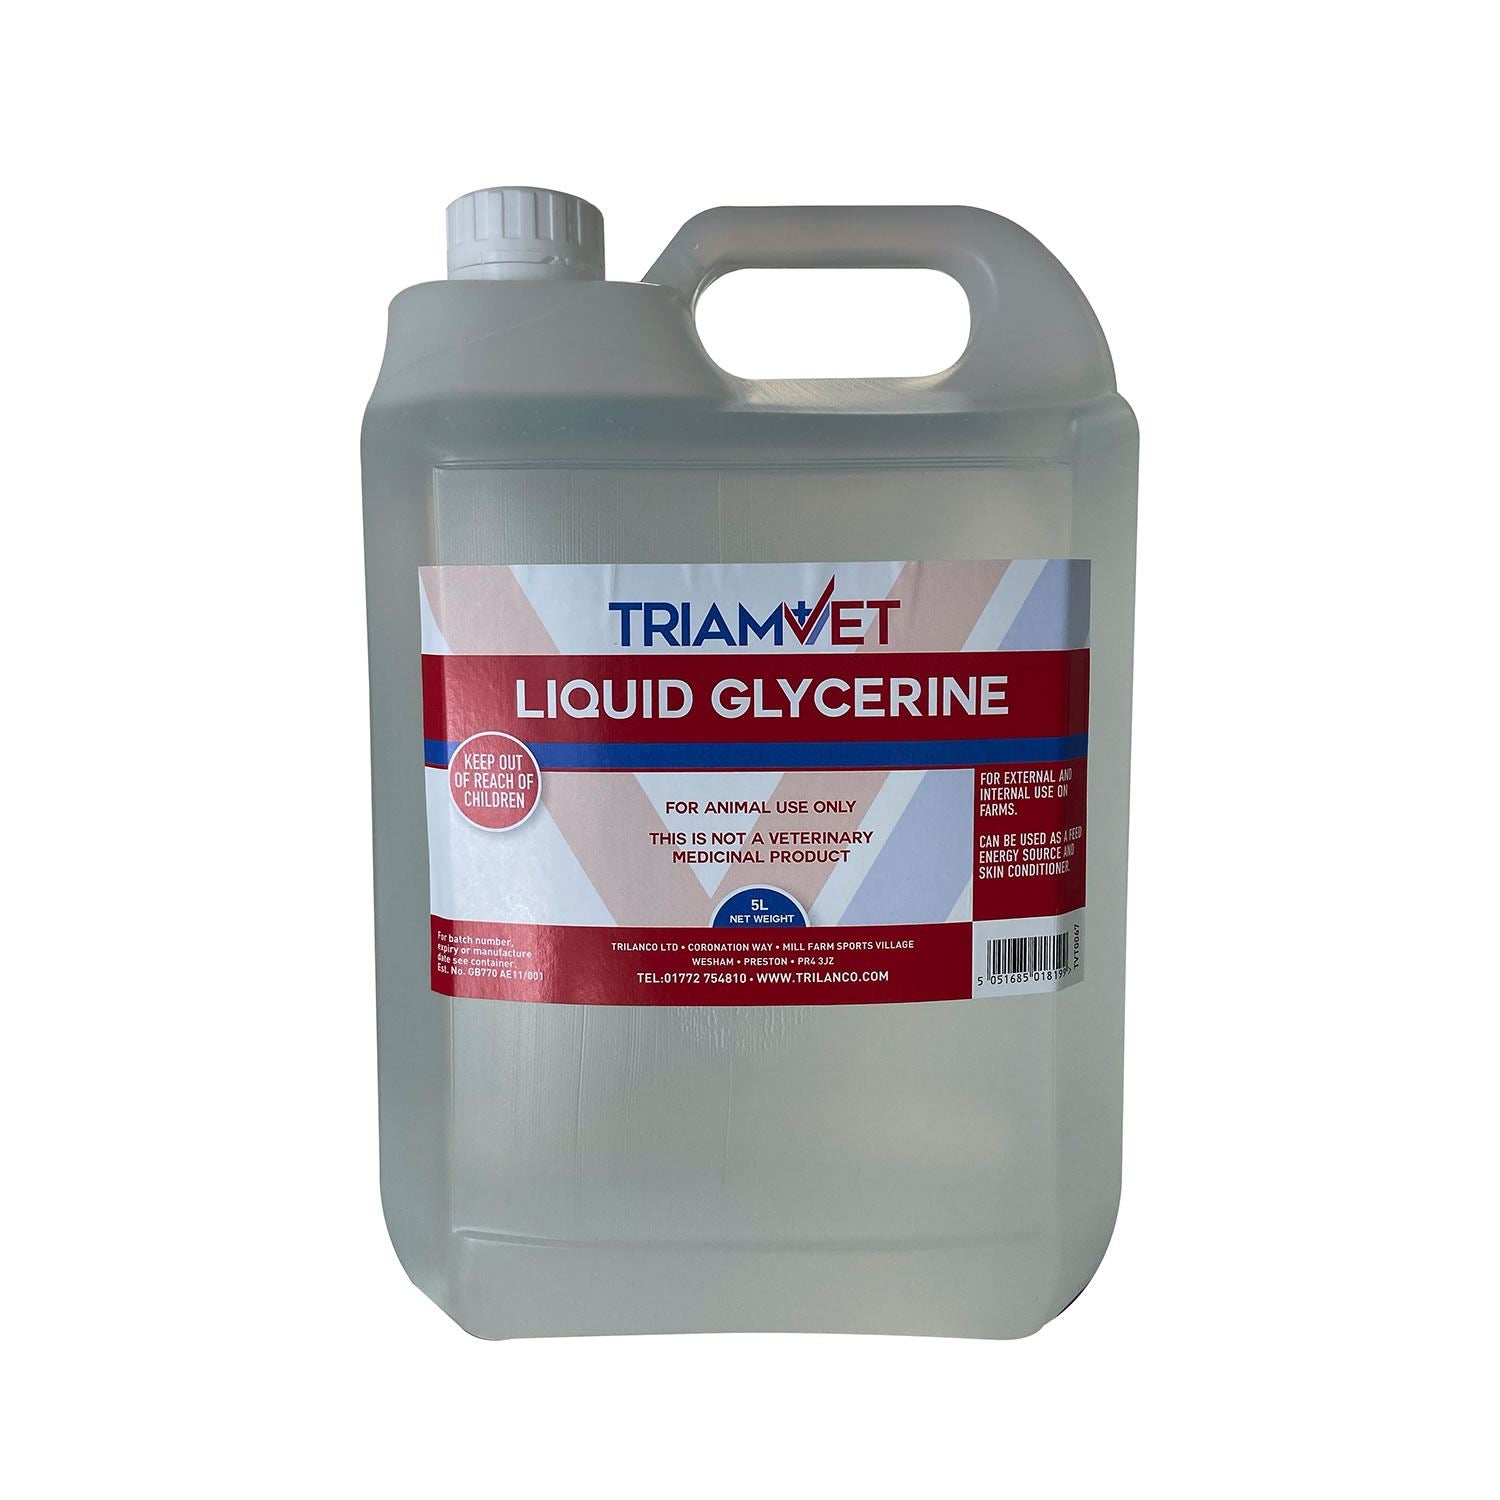 Triamvet Liquid Glycerine - Just Horse Riders